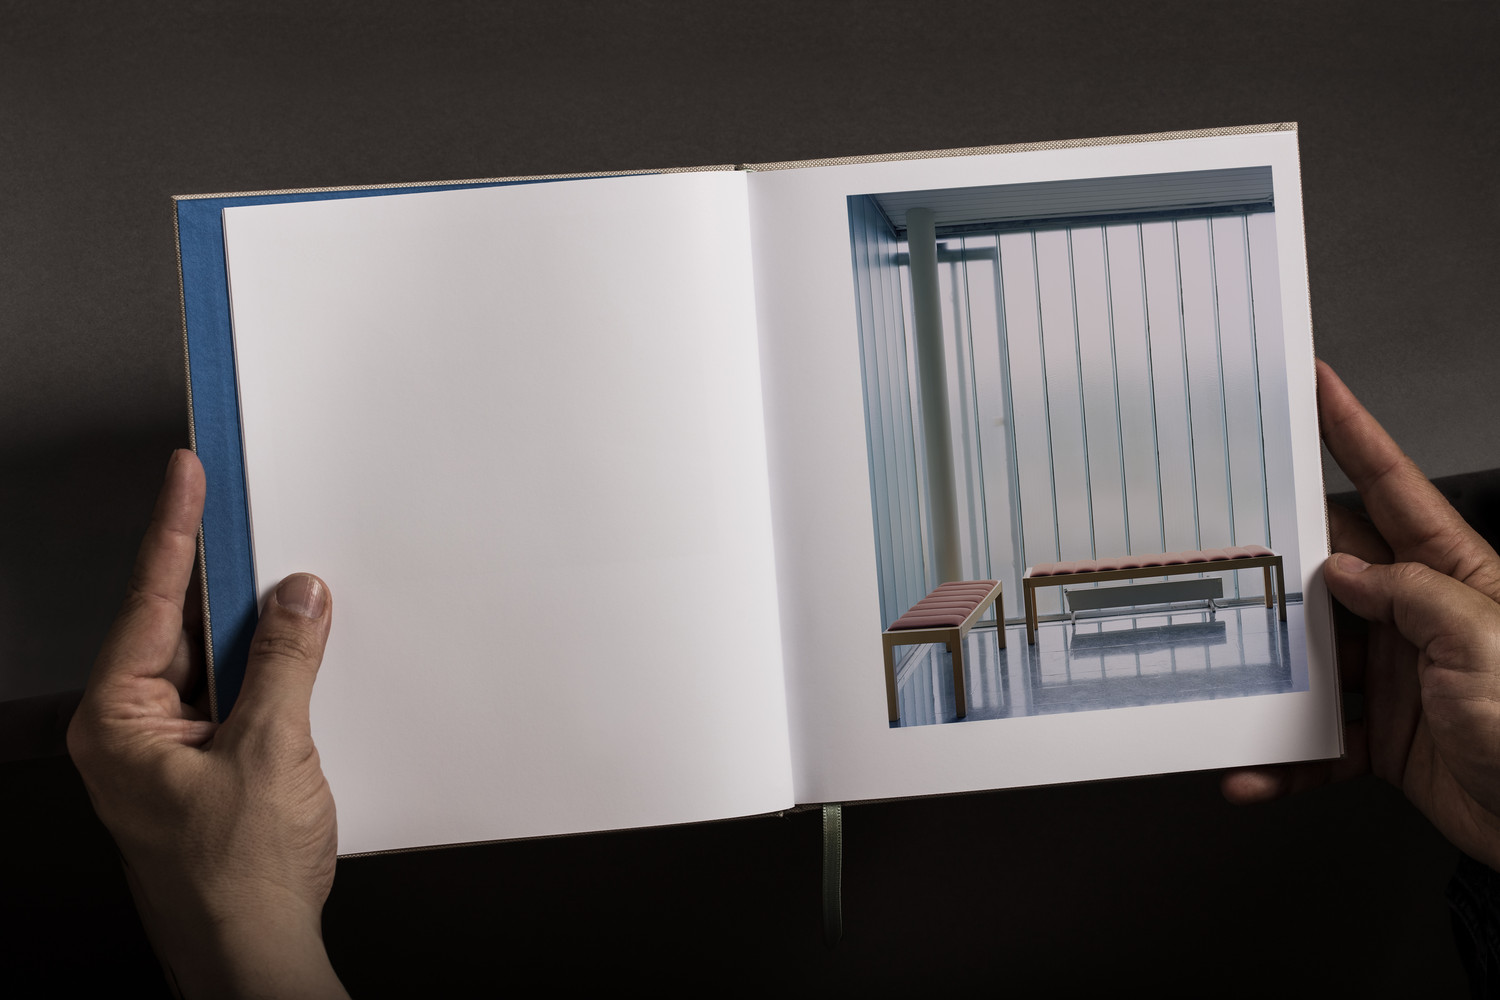 Book designed by Lundgren+Lindqvist for Kalle Sanner's photographic project Lukas/Markus